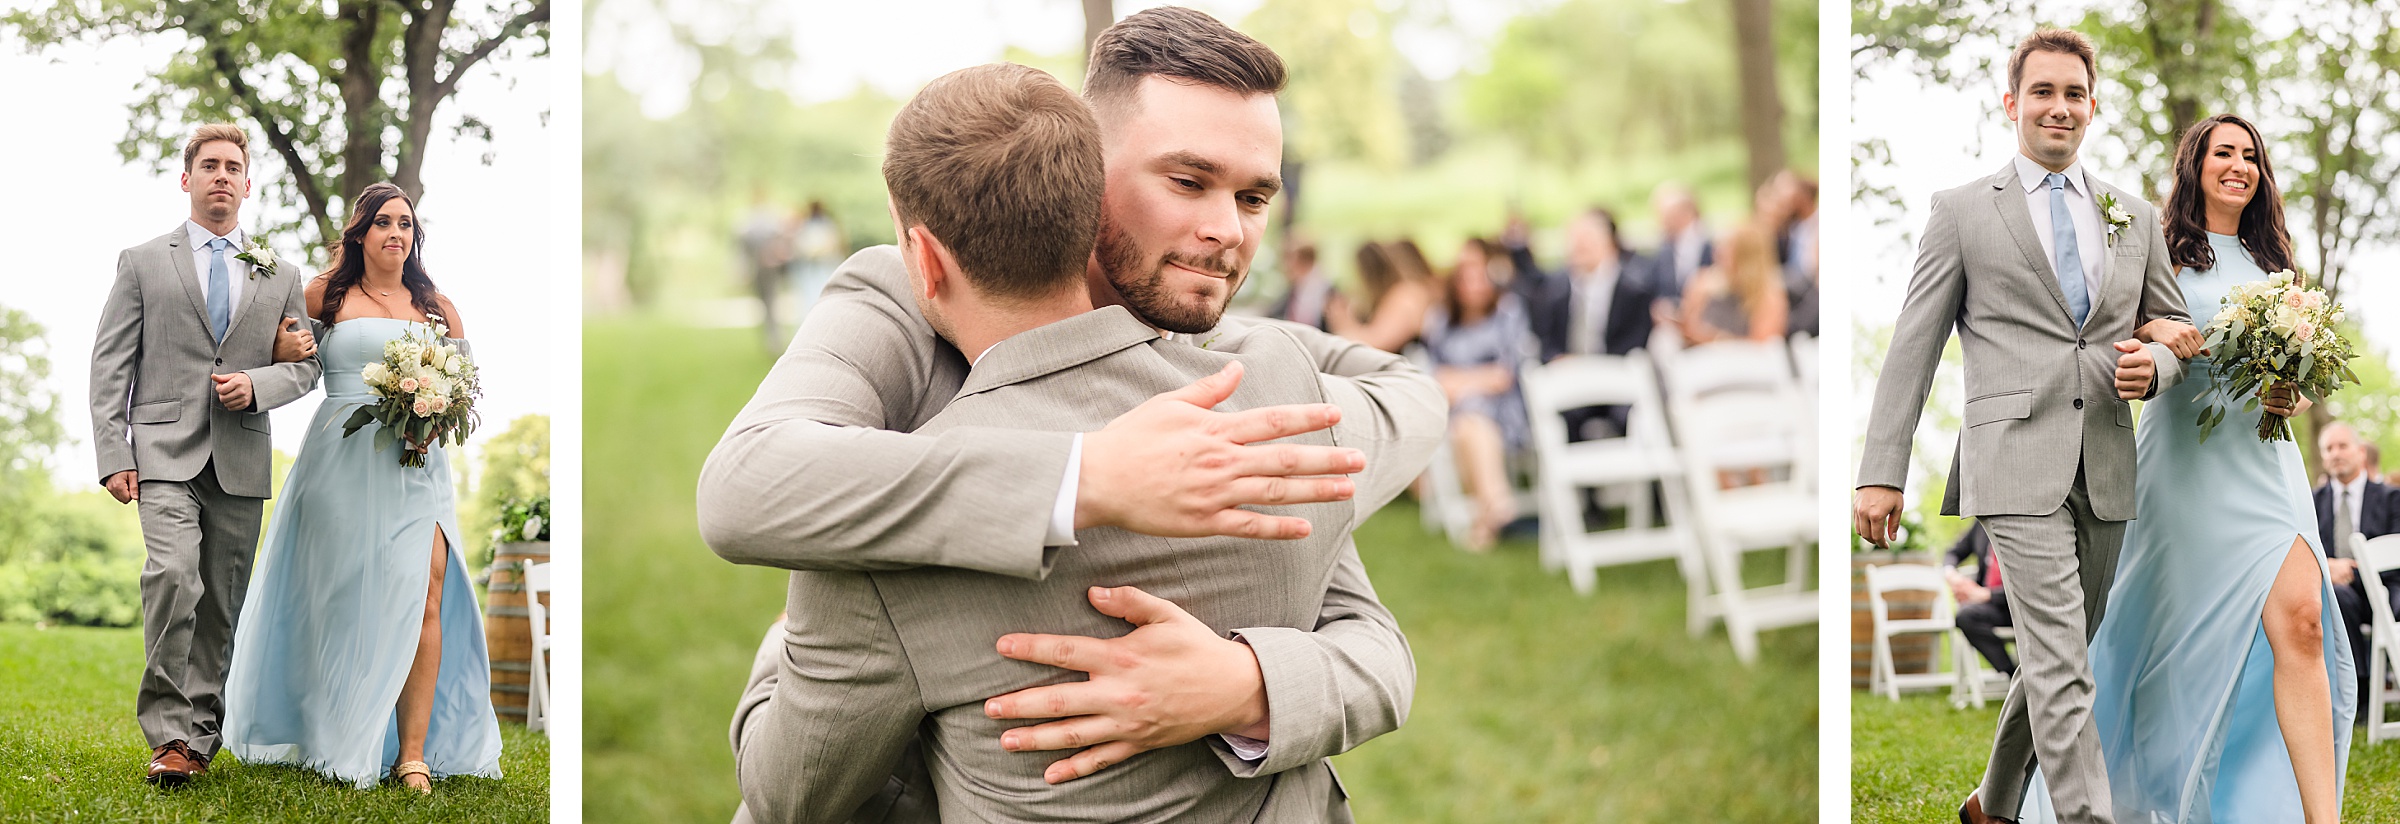 Groomsmen hugs groom during a wedding ceremony at the Monte Bello Estate in Lemont, Illinois